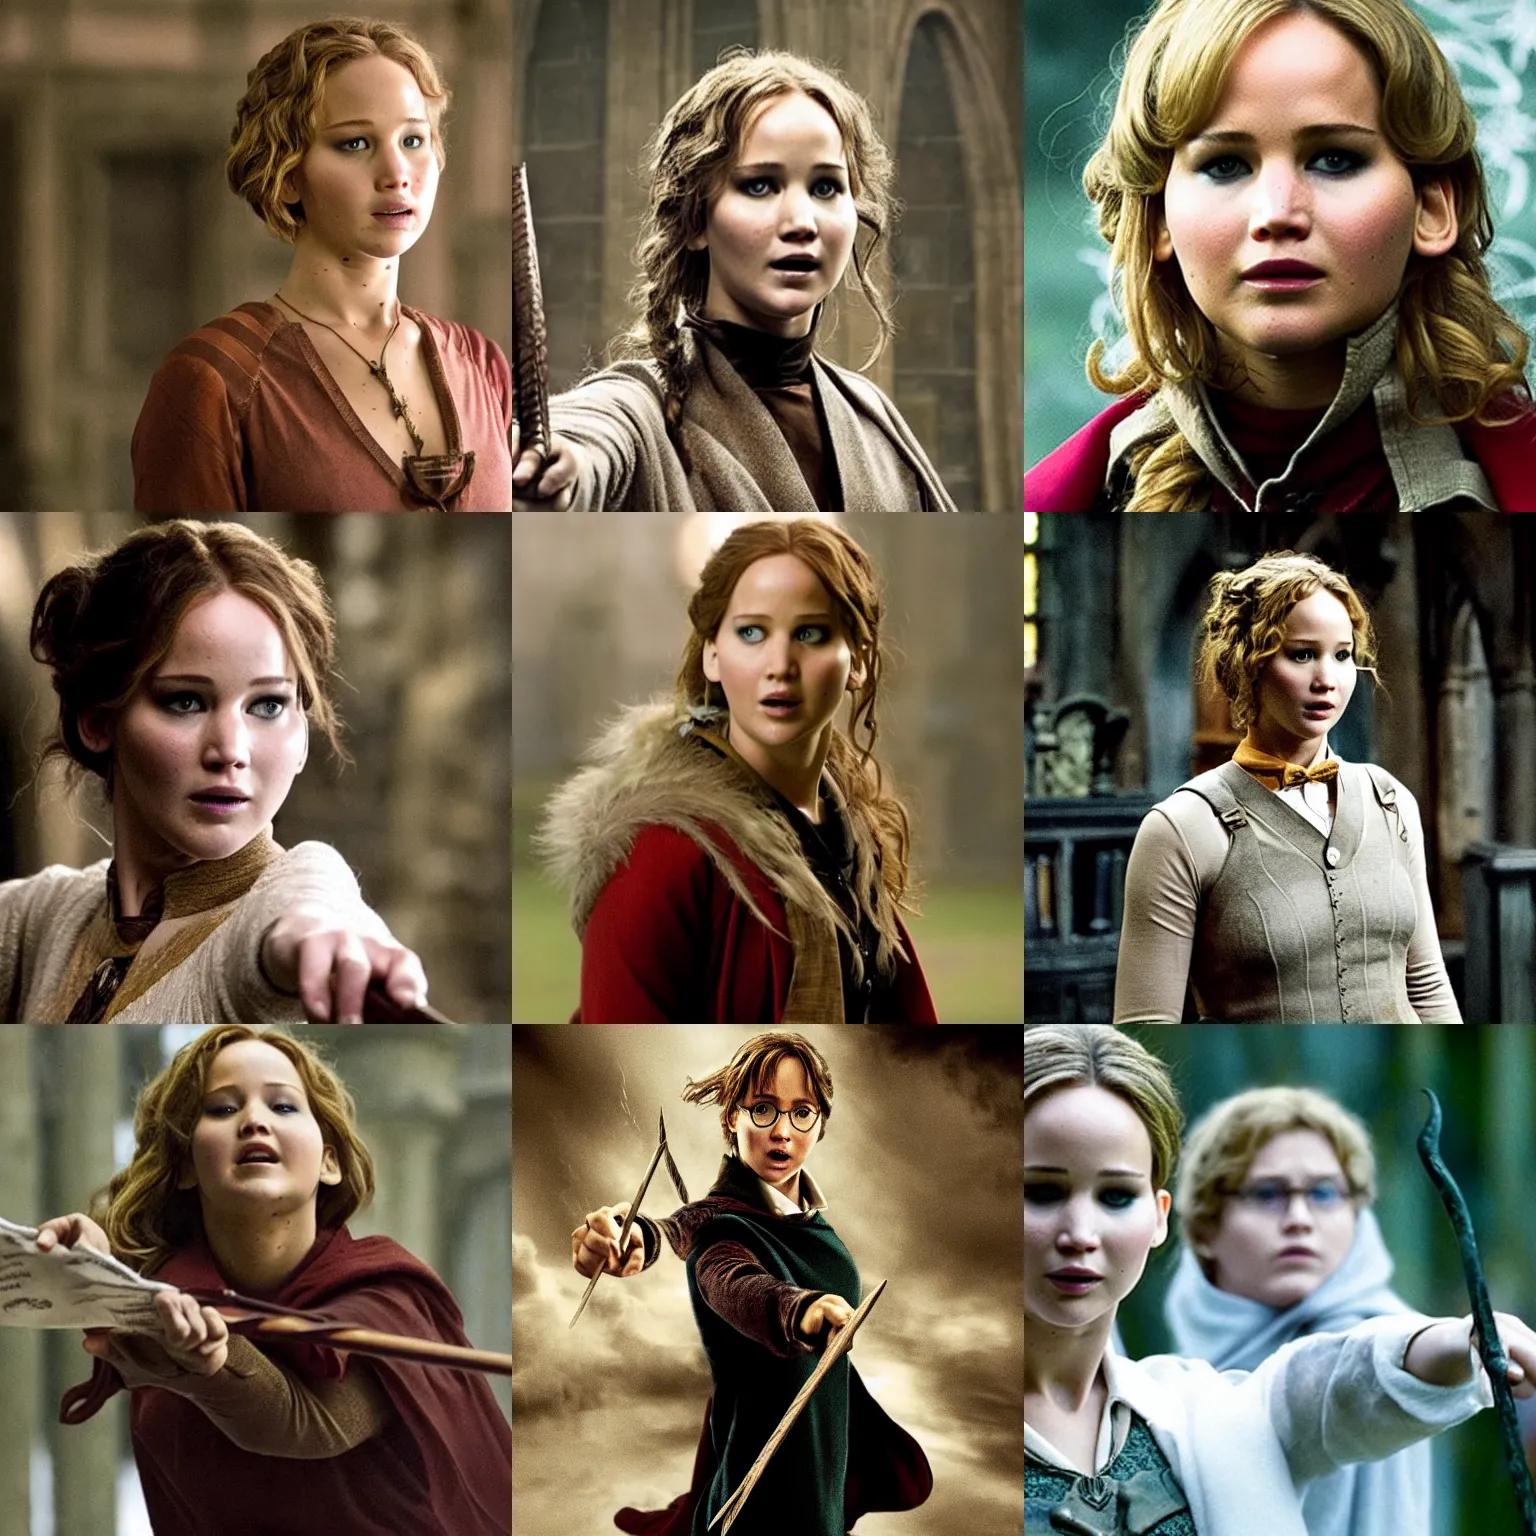 Prompt: Jennifer Lawrence as Harry Potter, film still from 'Harry Potter